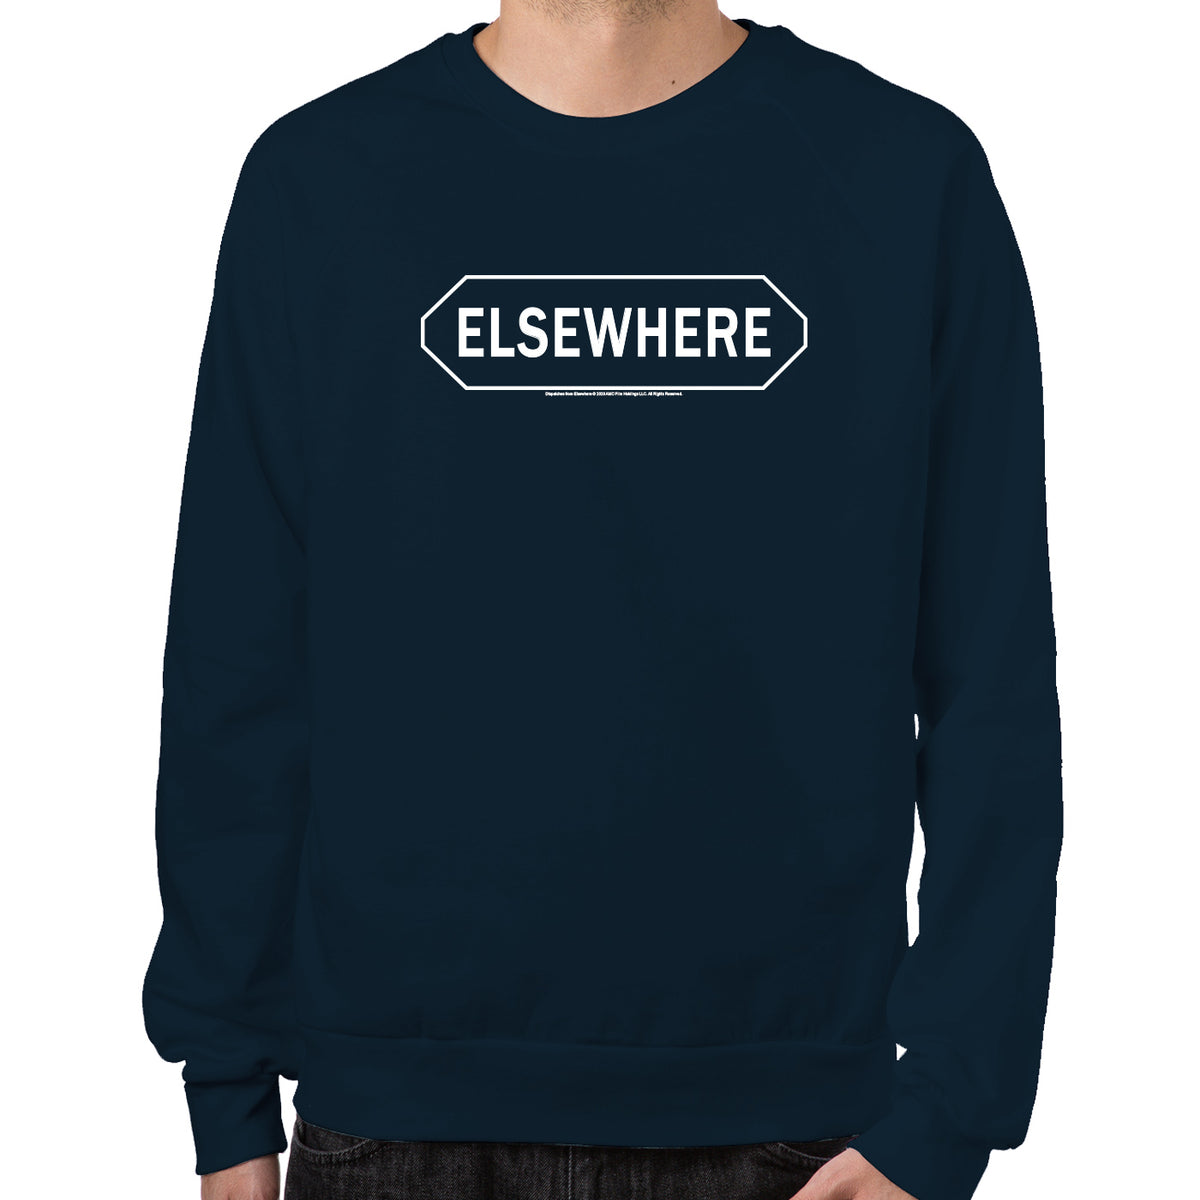 Elsewhere Sweatshirt